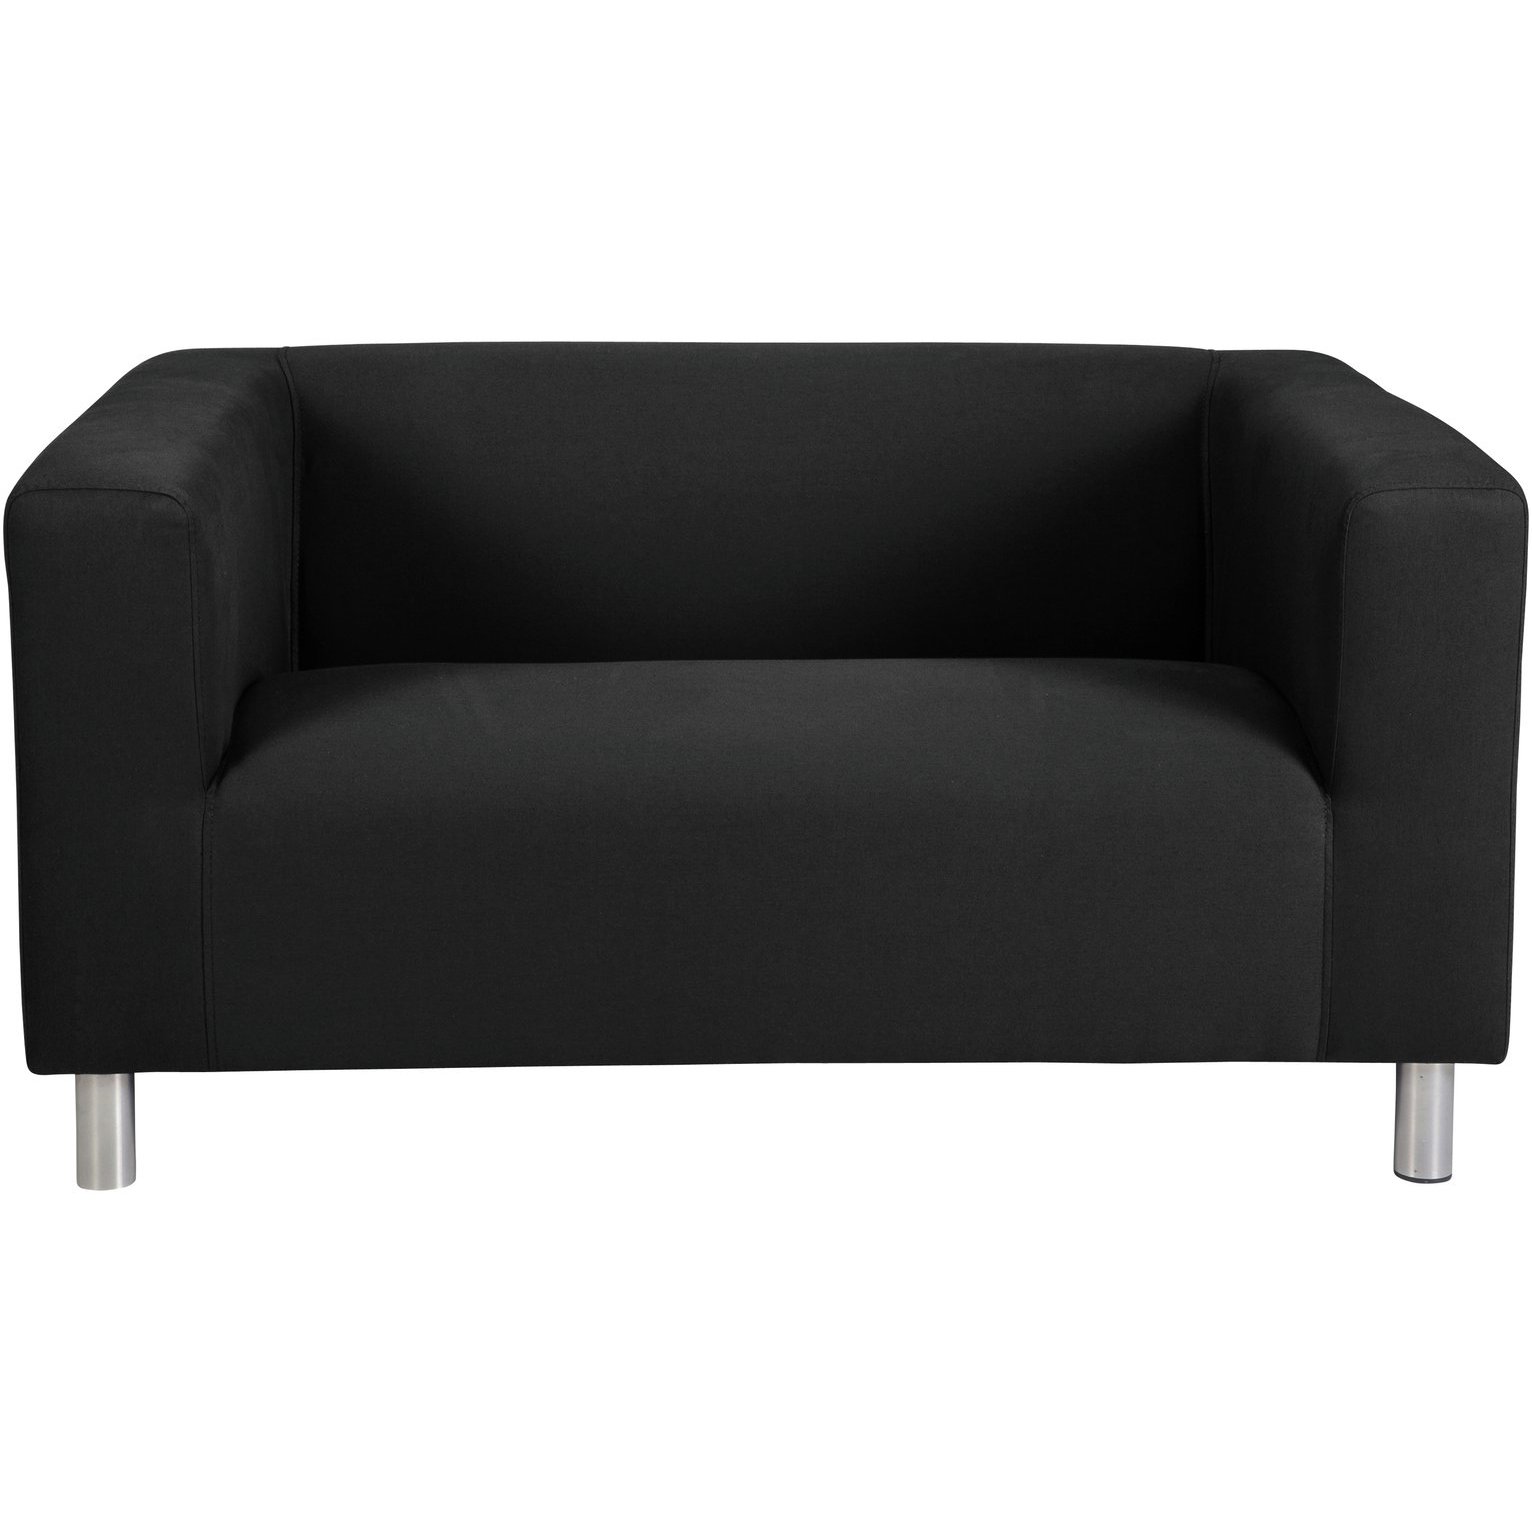 Argos Home Moda Compact 2 Seater Fabric Sofa - Black